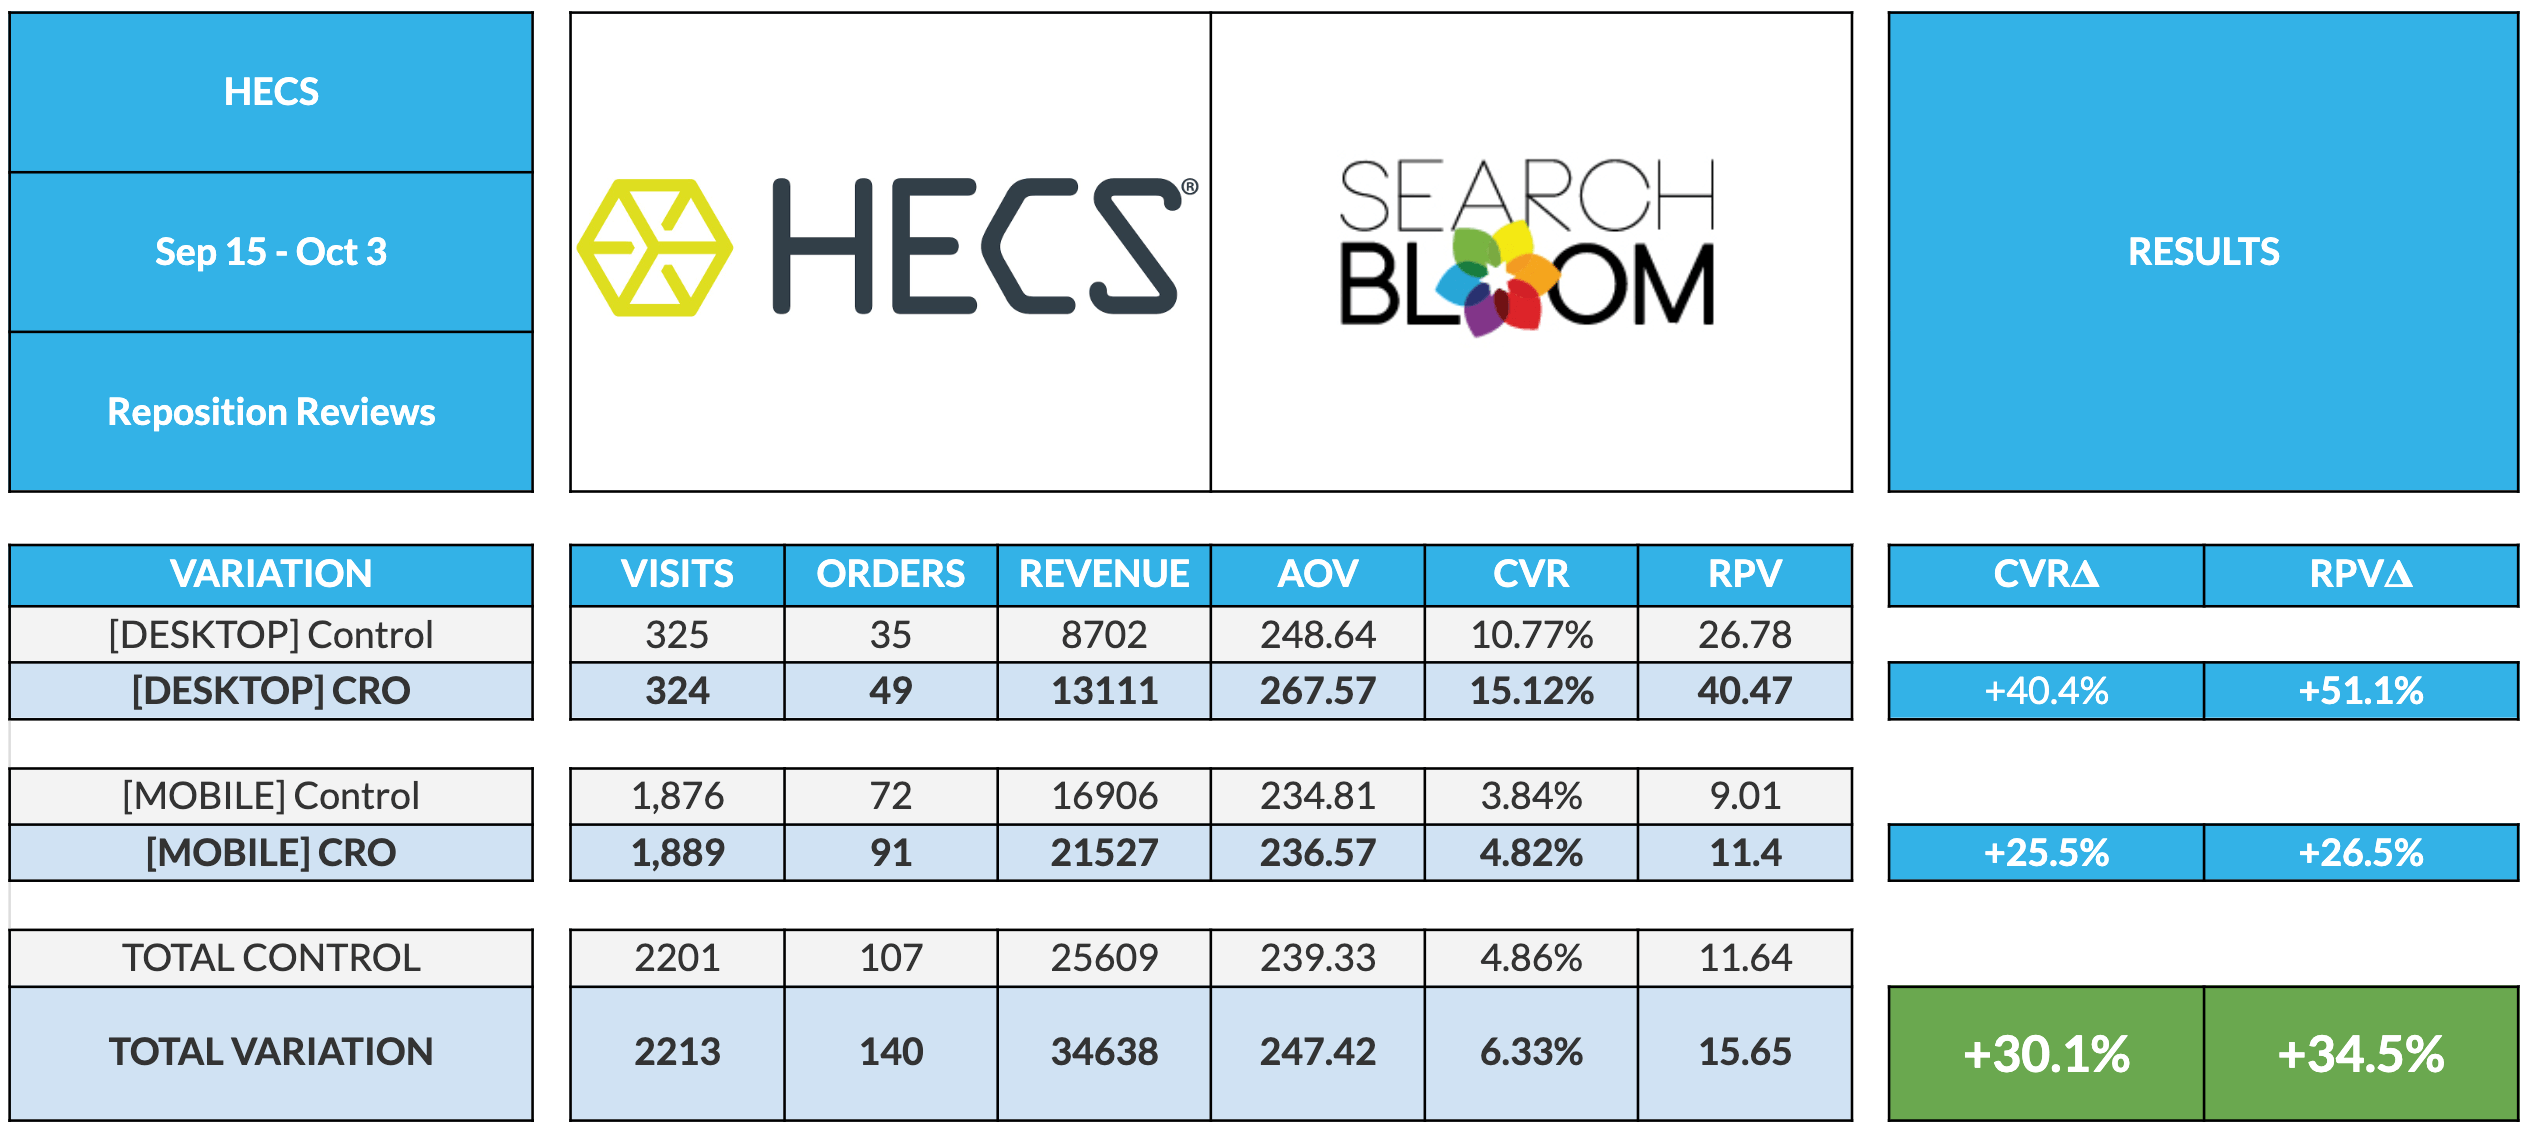 HECS CRO - Reposition Review